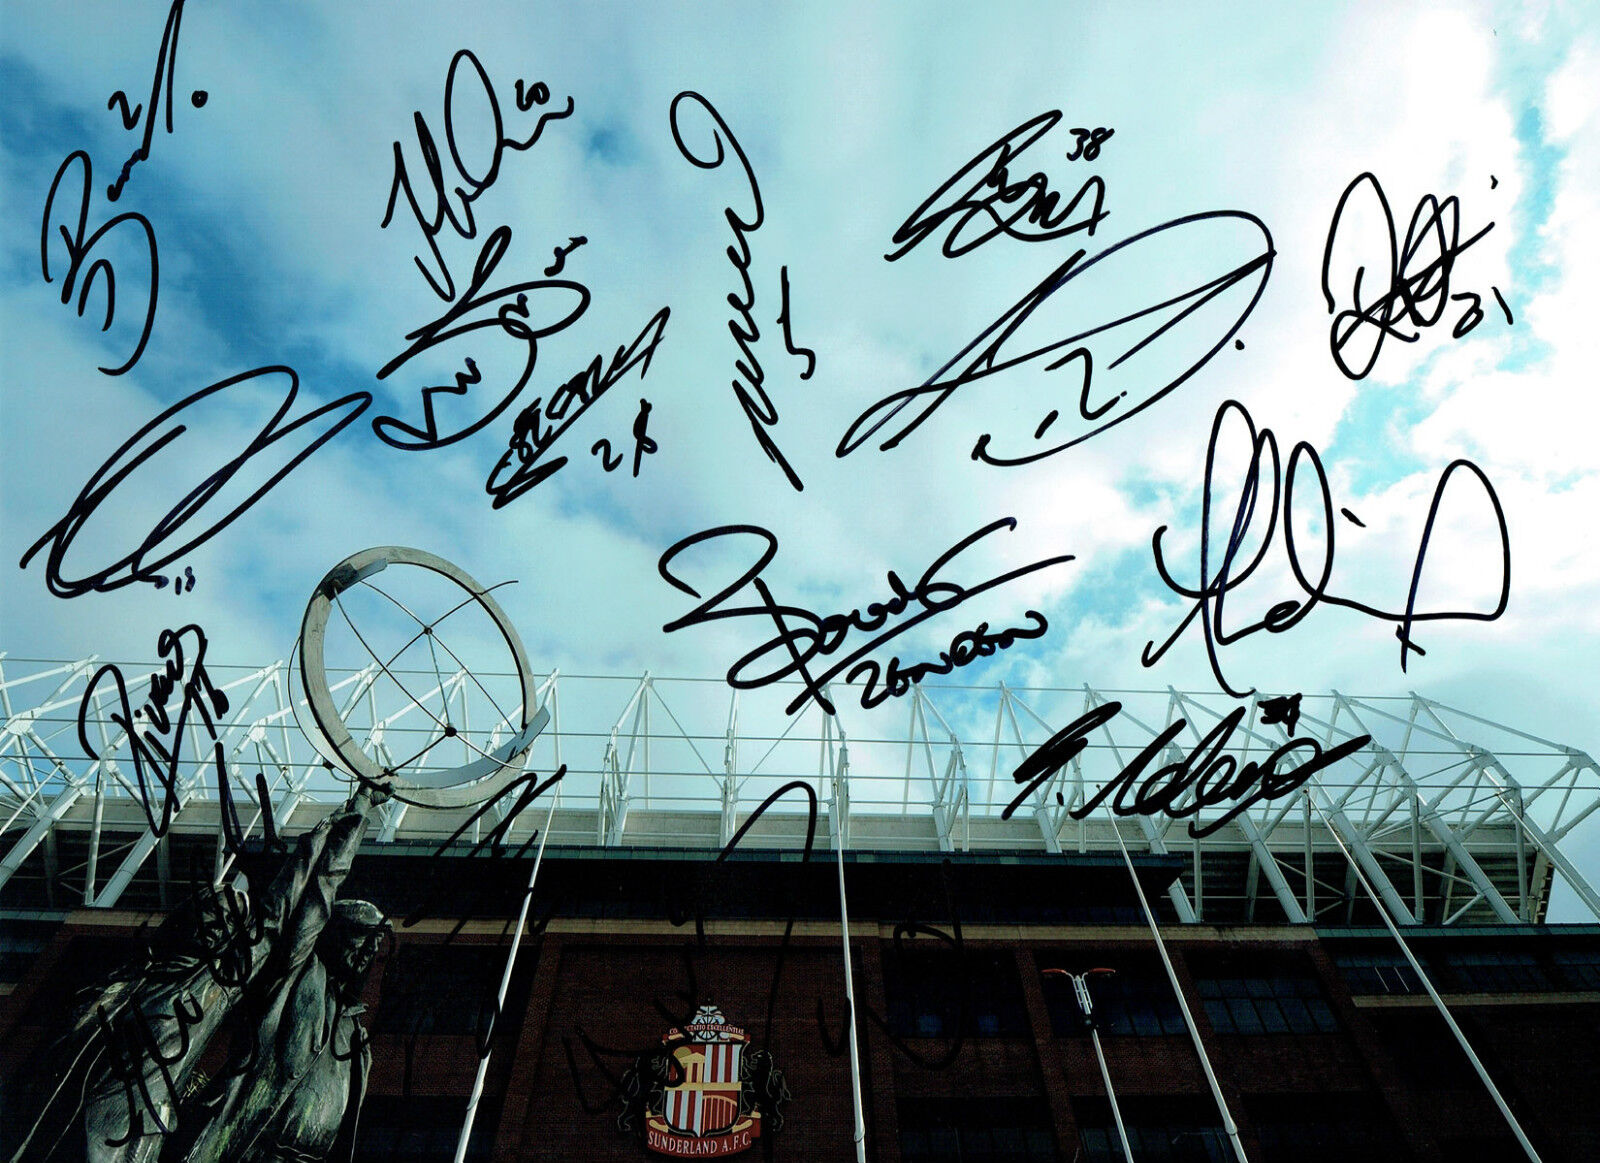 Sunderland AFC Squad Multi Signed Autograph 16x12 Photo Poster painting AFTAL COA